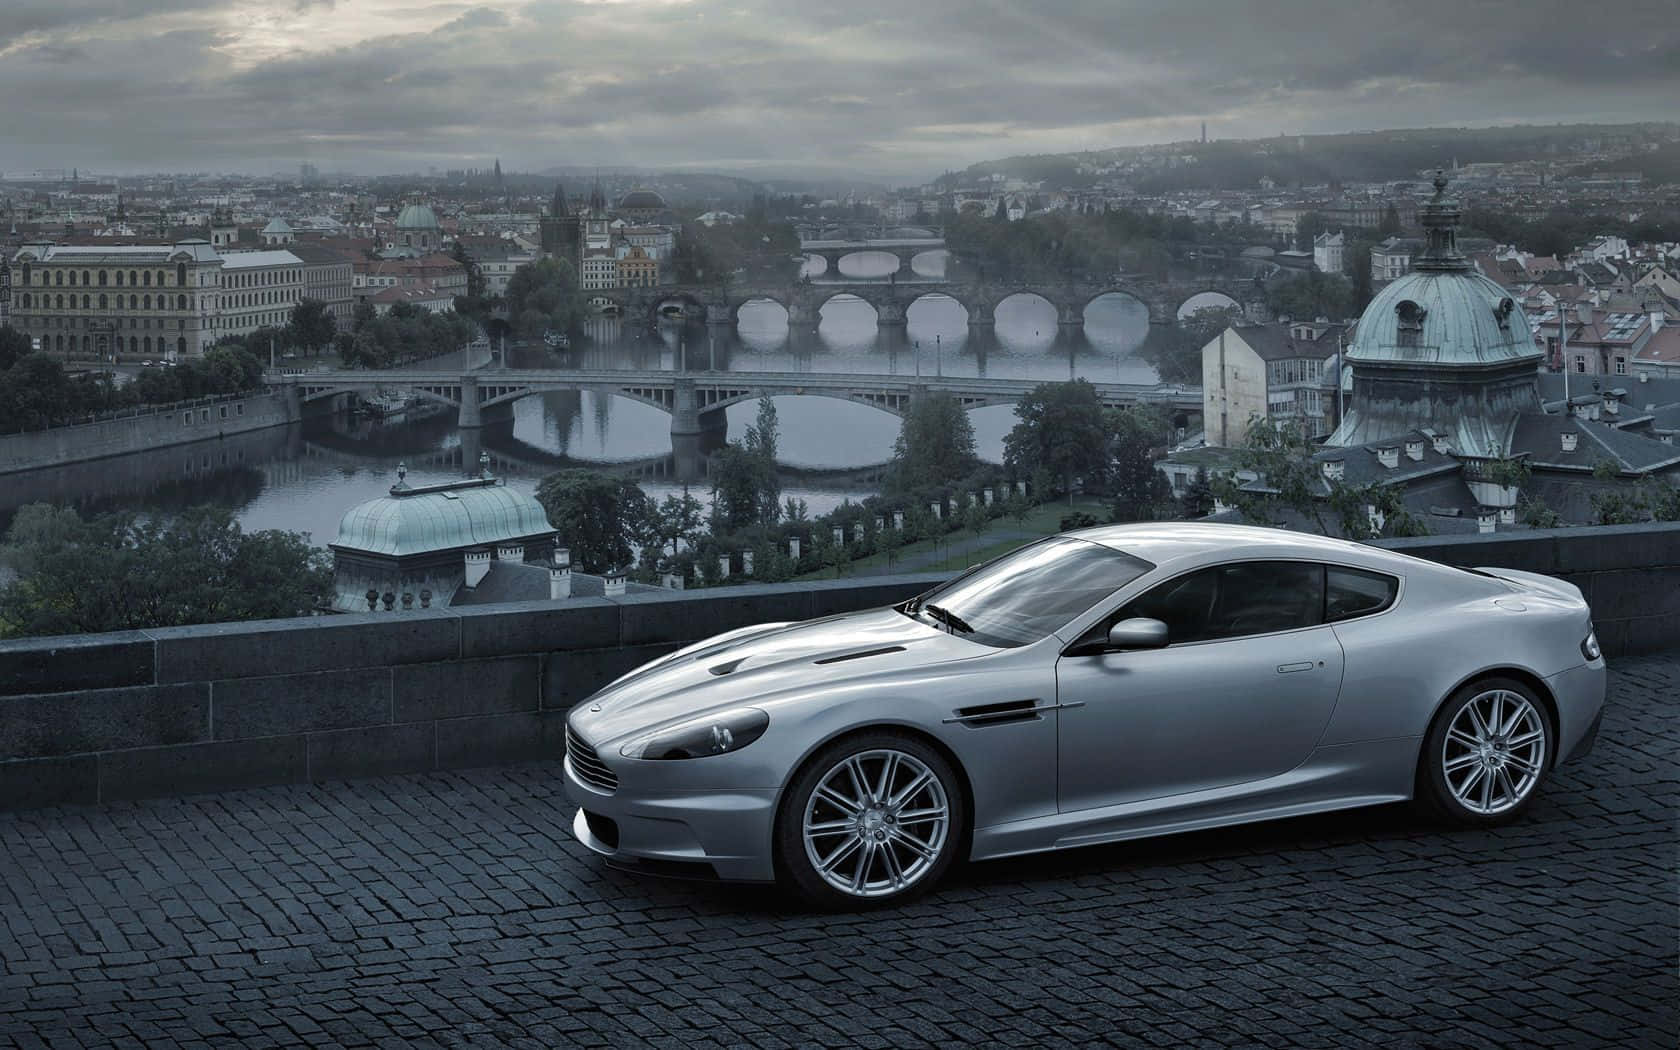 Stunning Aston Martin Vanquish Ready for a Drive Wallpaper